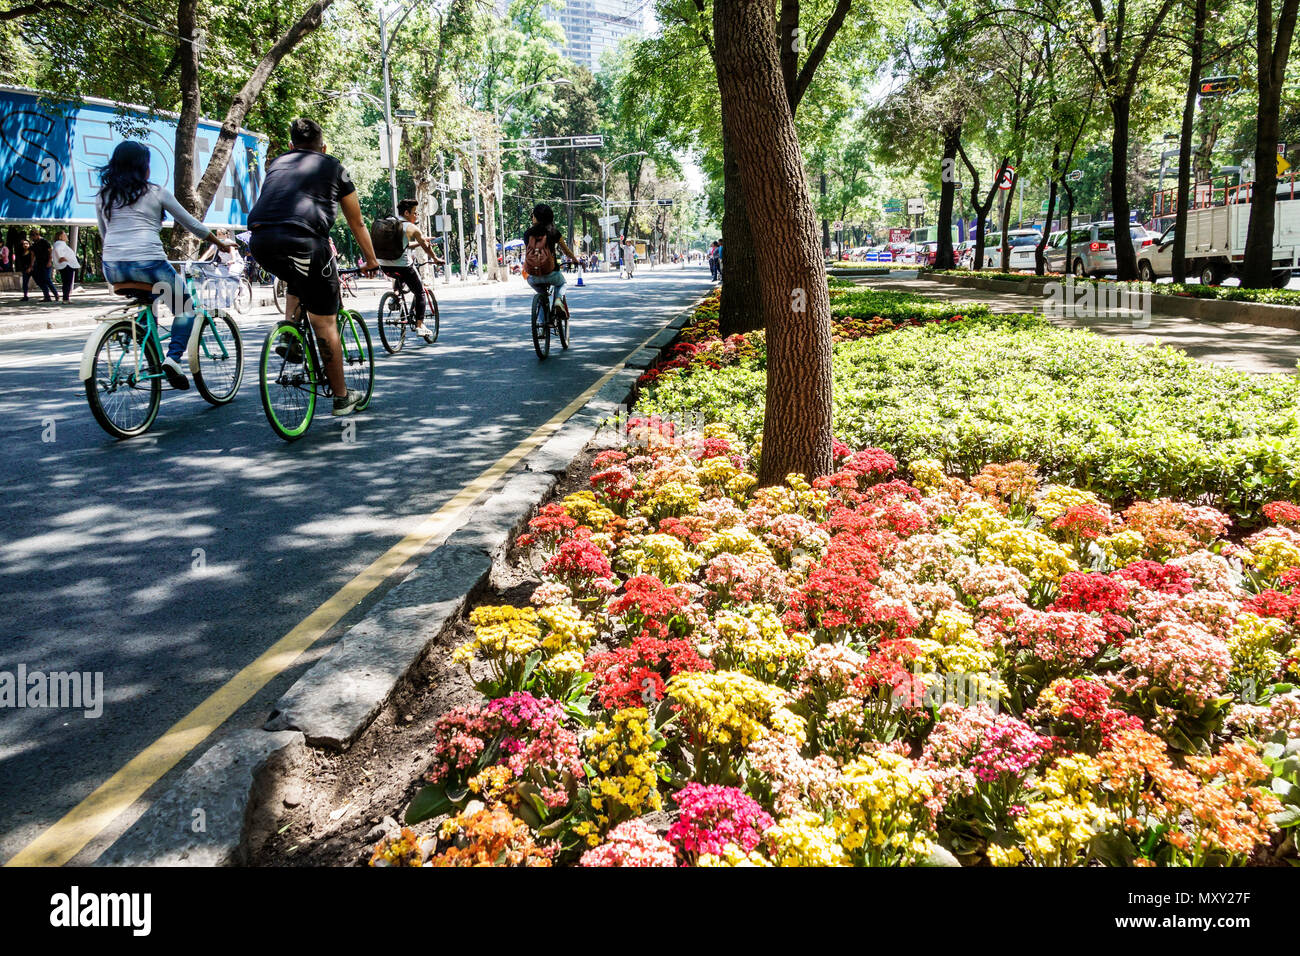 Mexico City,Hispanic Bosque de Chapultepec forest,Paseo la Reforma,bicycle bicycles bicycling riding biking rider riders bike bikess,Muevete en Bici,M Stock Photo